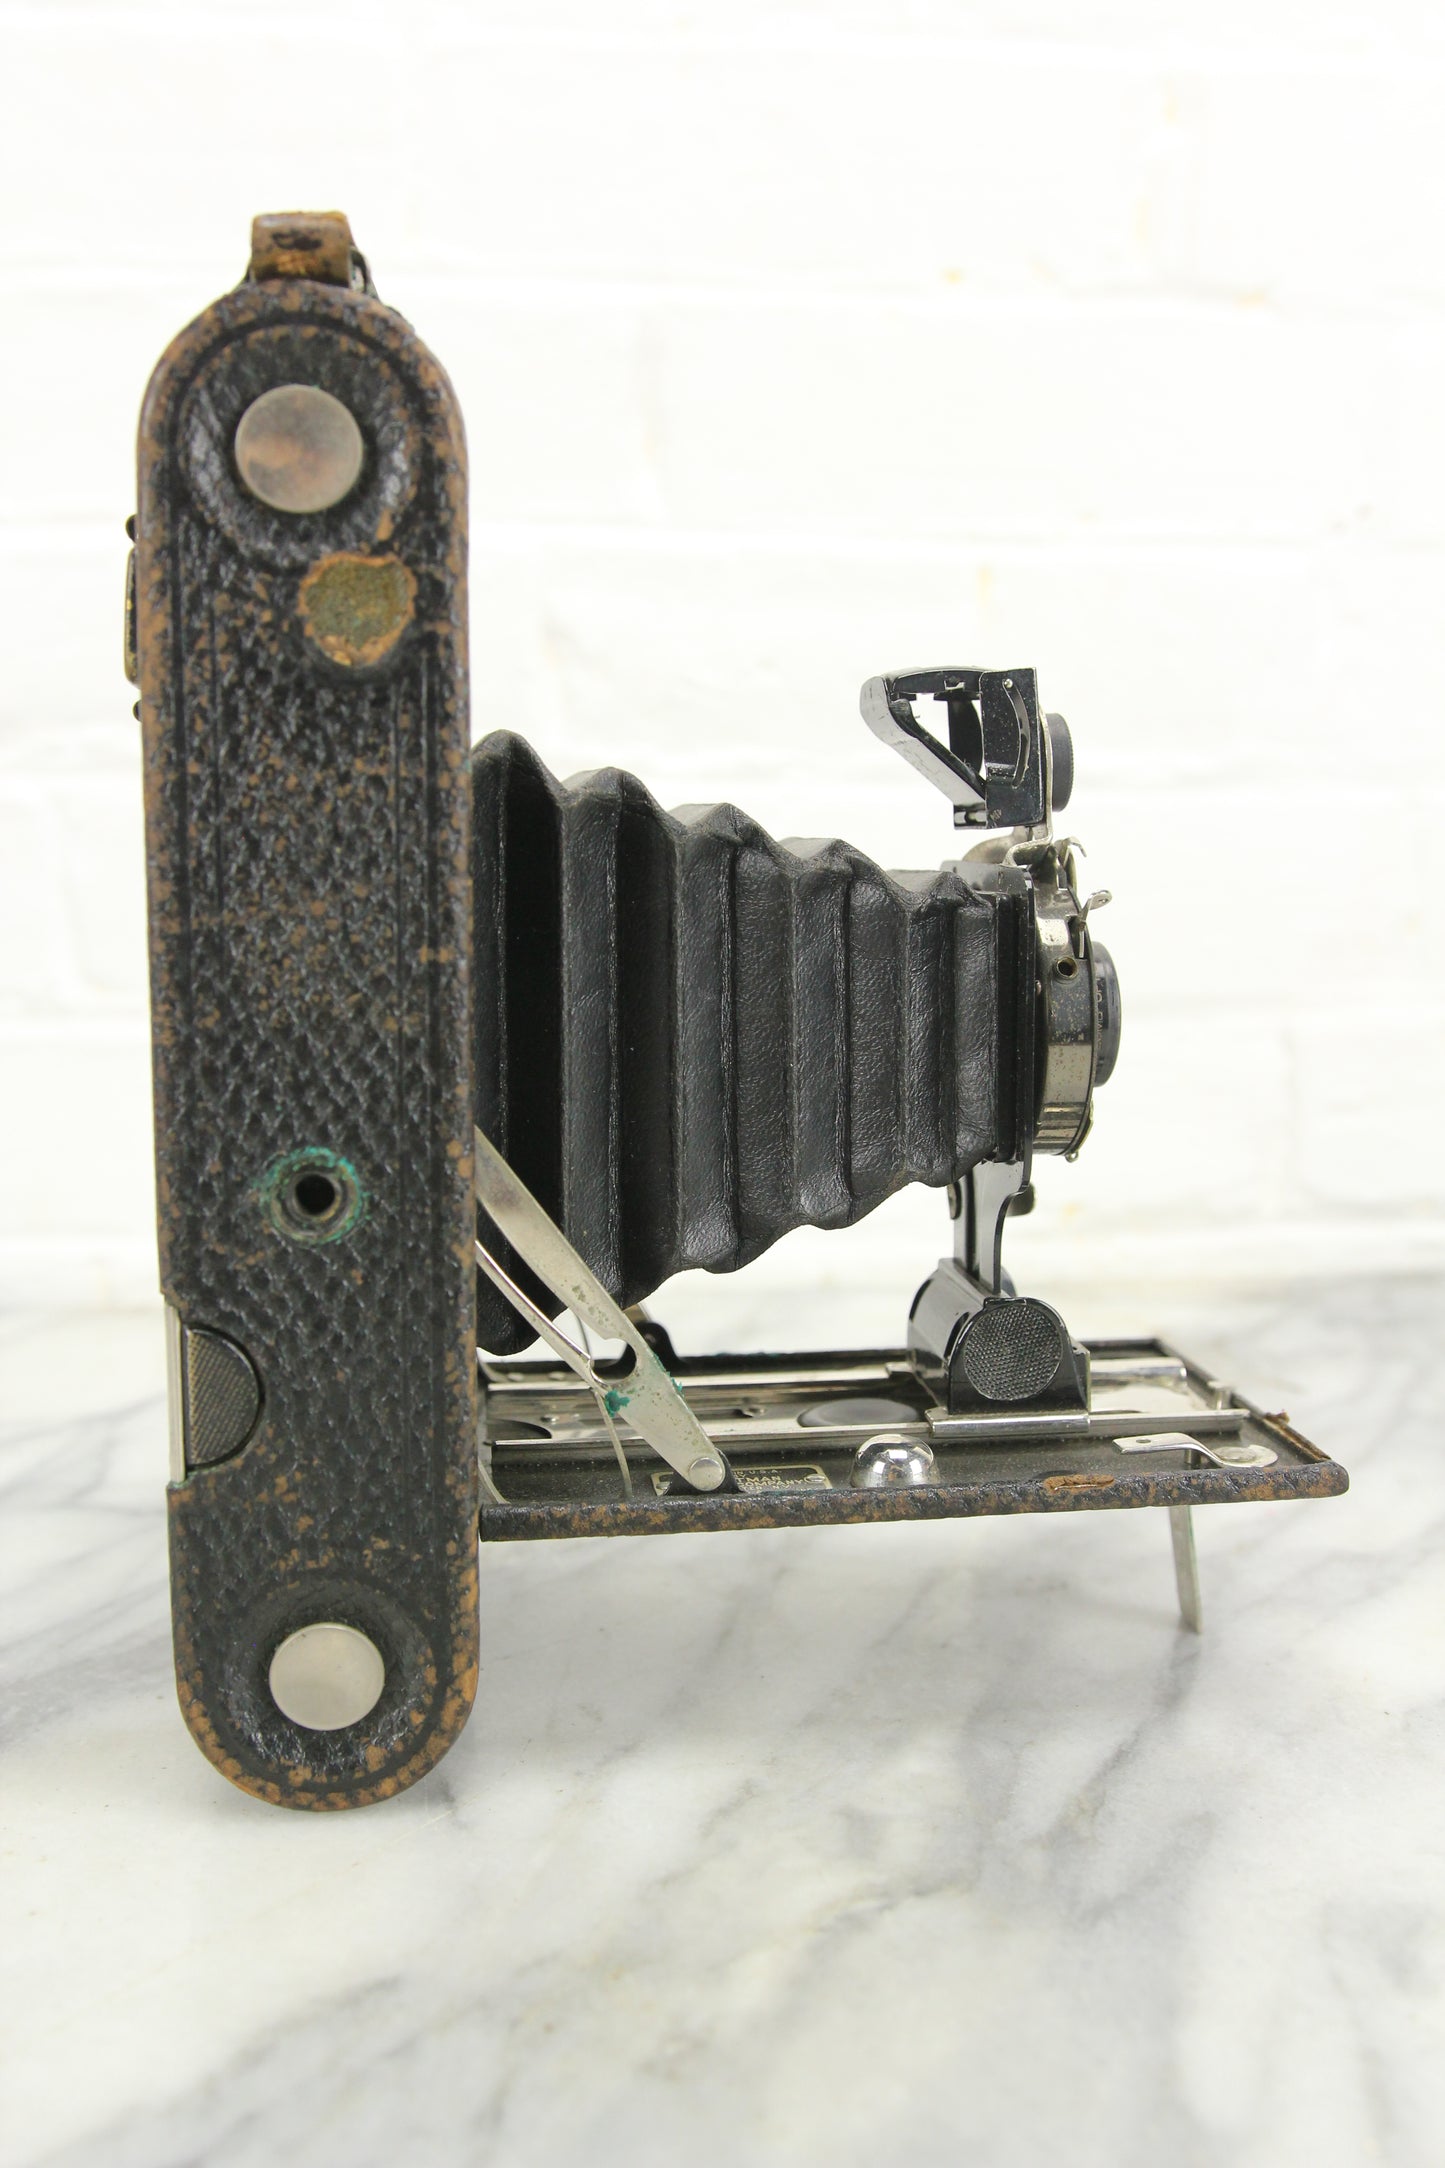 Eastman Kodak No. 1-A Autographic Kodak Jr. Folding Camera